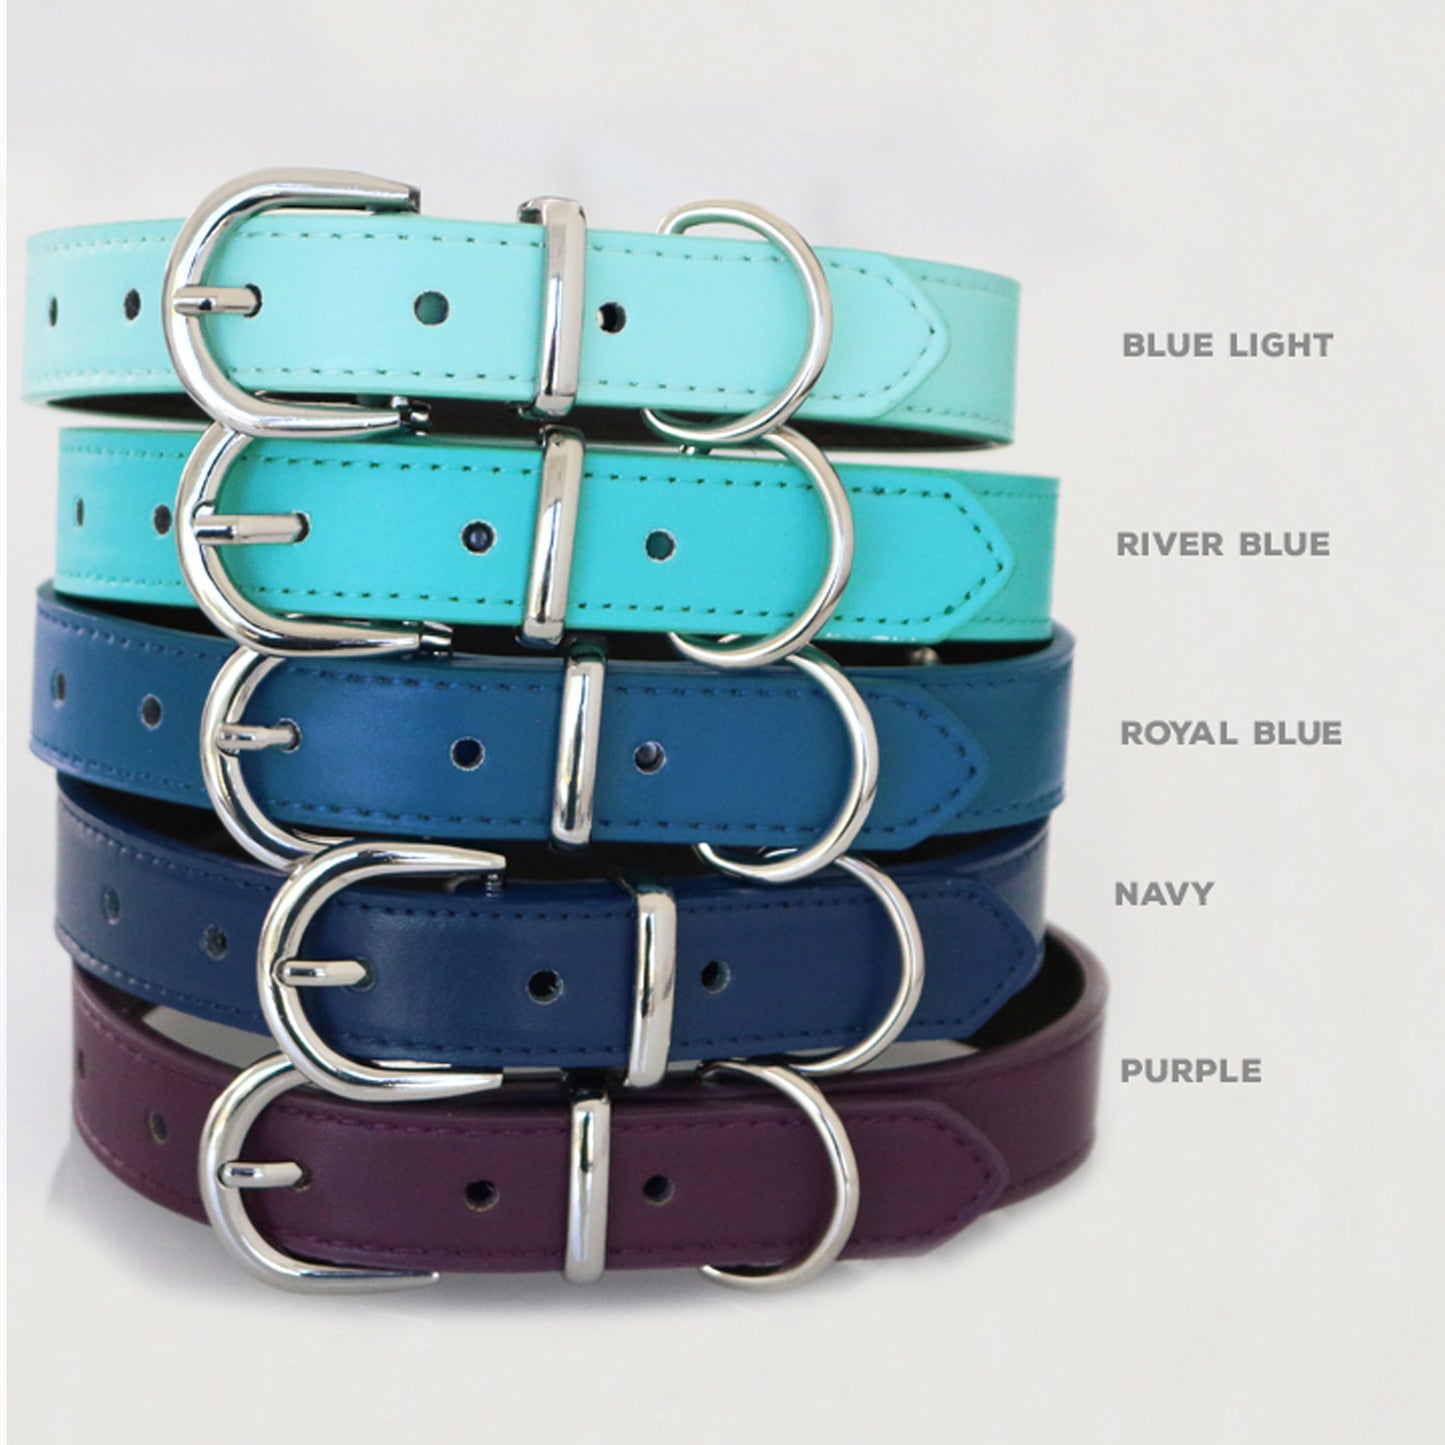 Ultra Violet dog bow tie collar, Color of 2018 PANTONE 18-3838, Pet Wedding, Gifts , Wedding dog collar